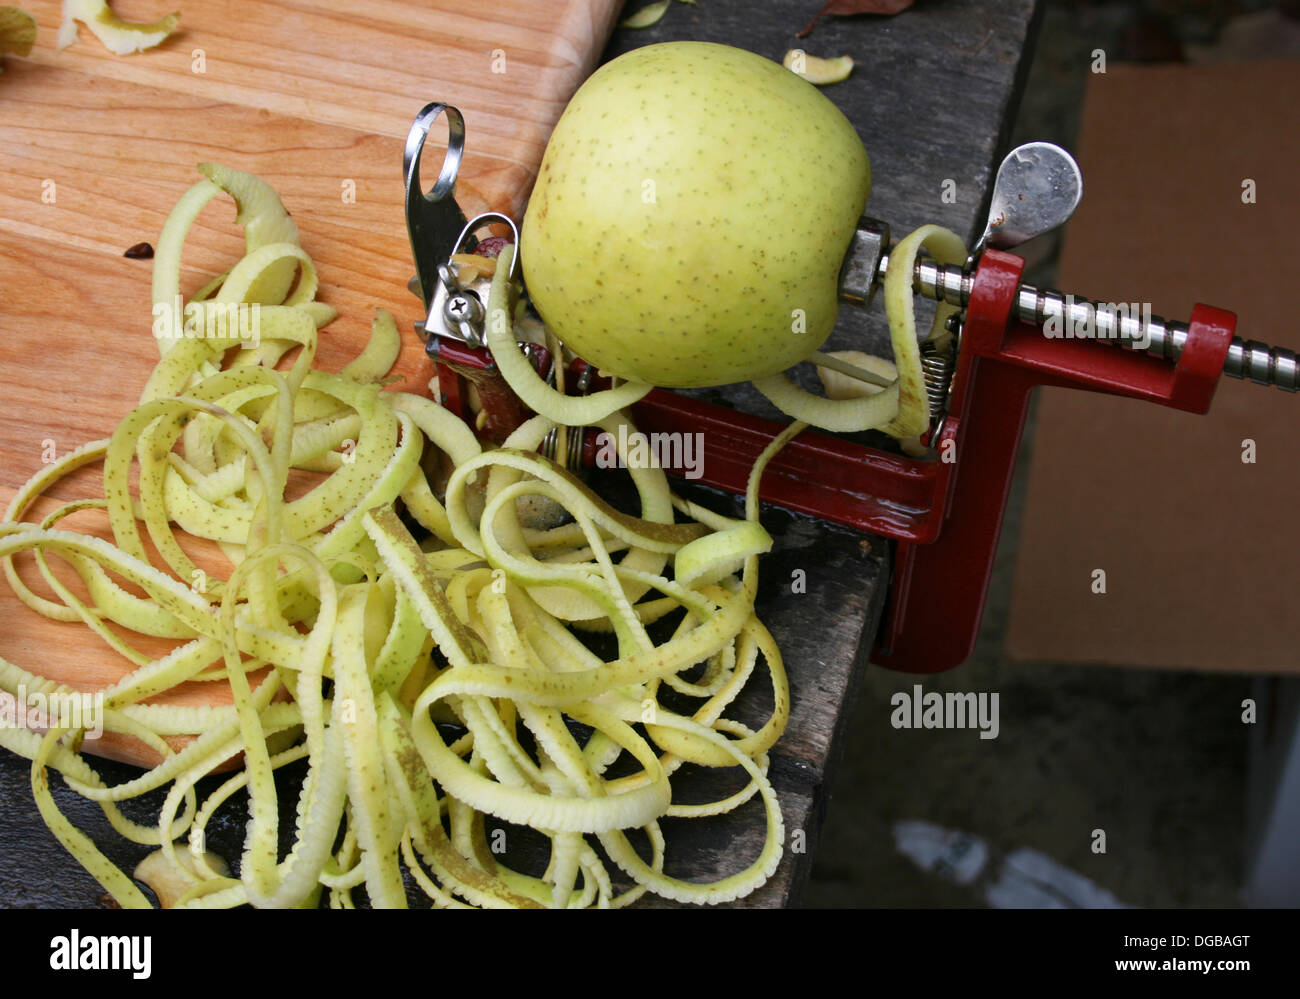 https://c8.alamy.com/comp/DGBAGT/green-apple-on-an-apple-peeler-with-apple-peelings-DGBAGT.jpg